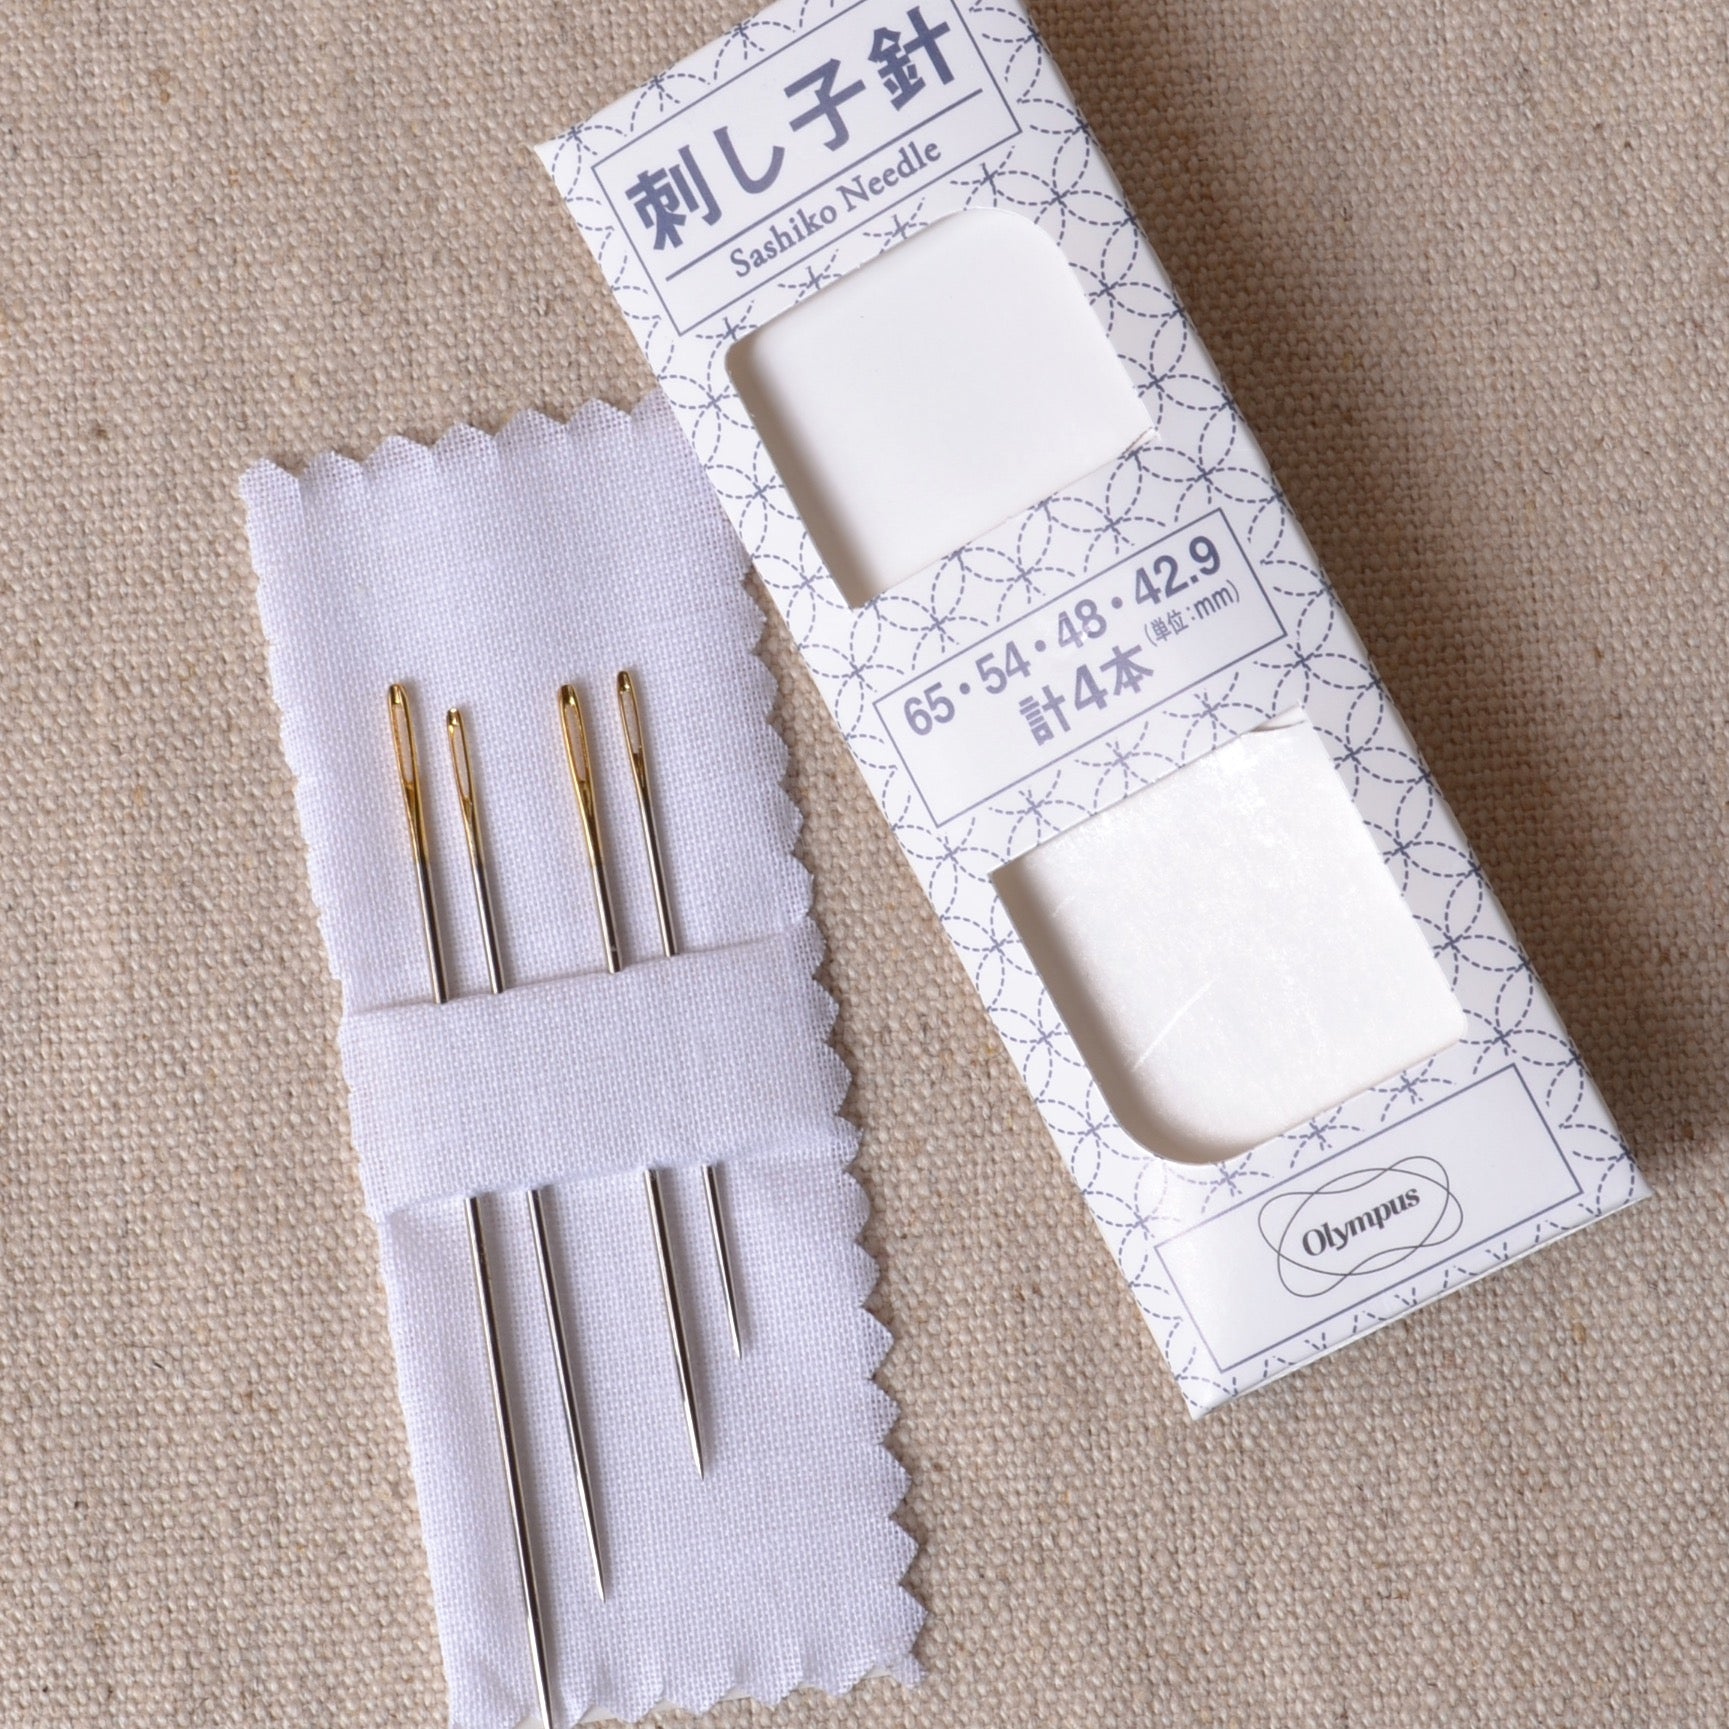 Sashiko Needles, Boro Needles Olympus brand